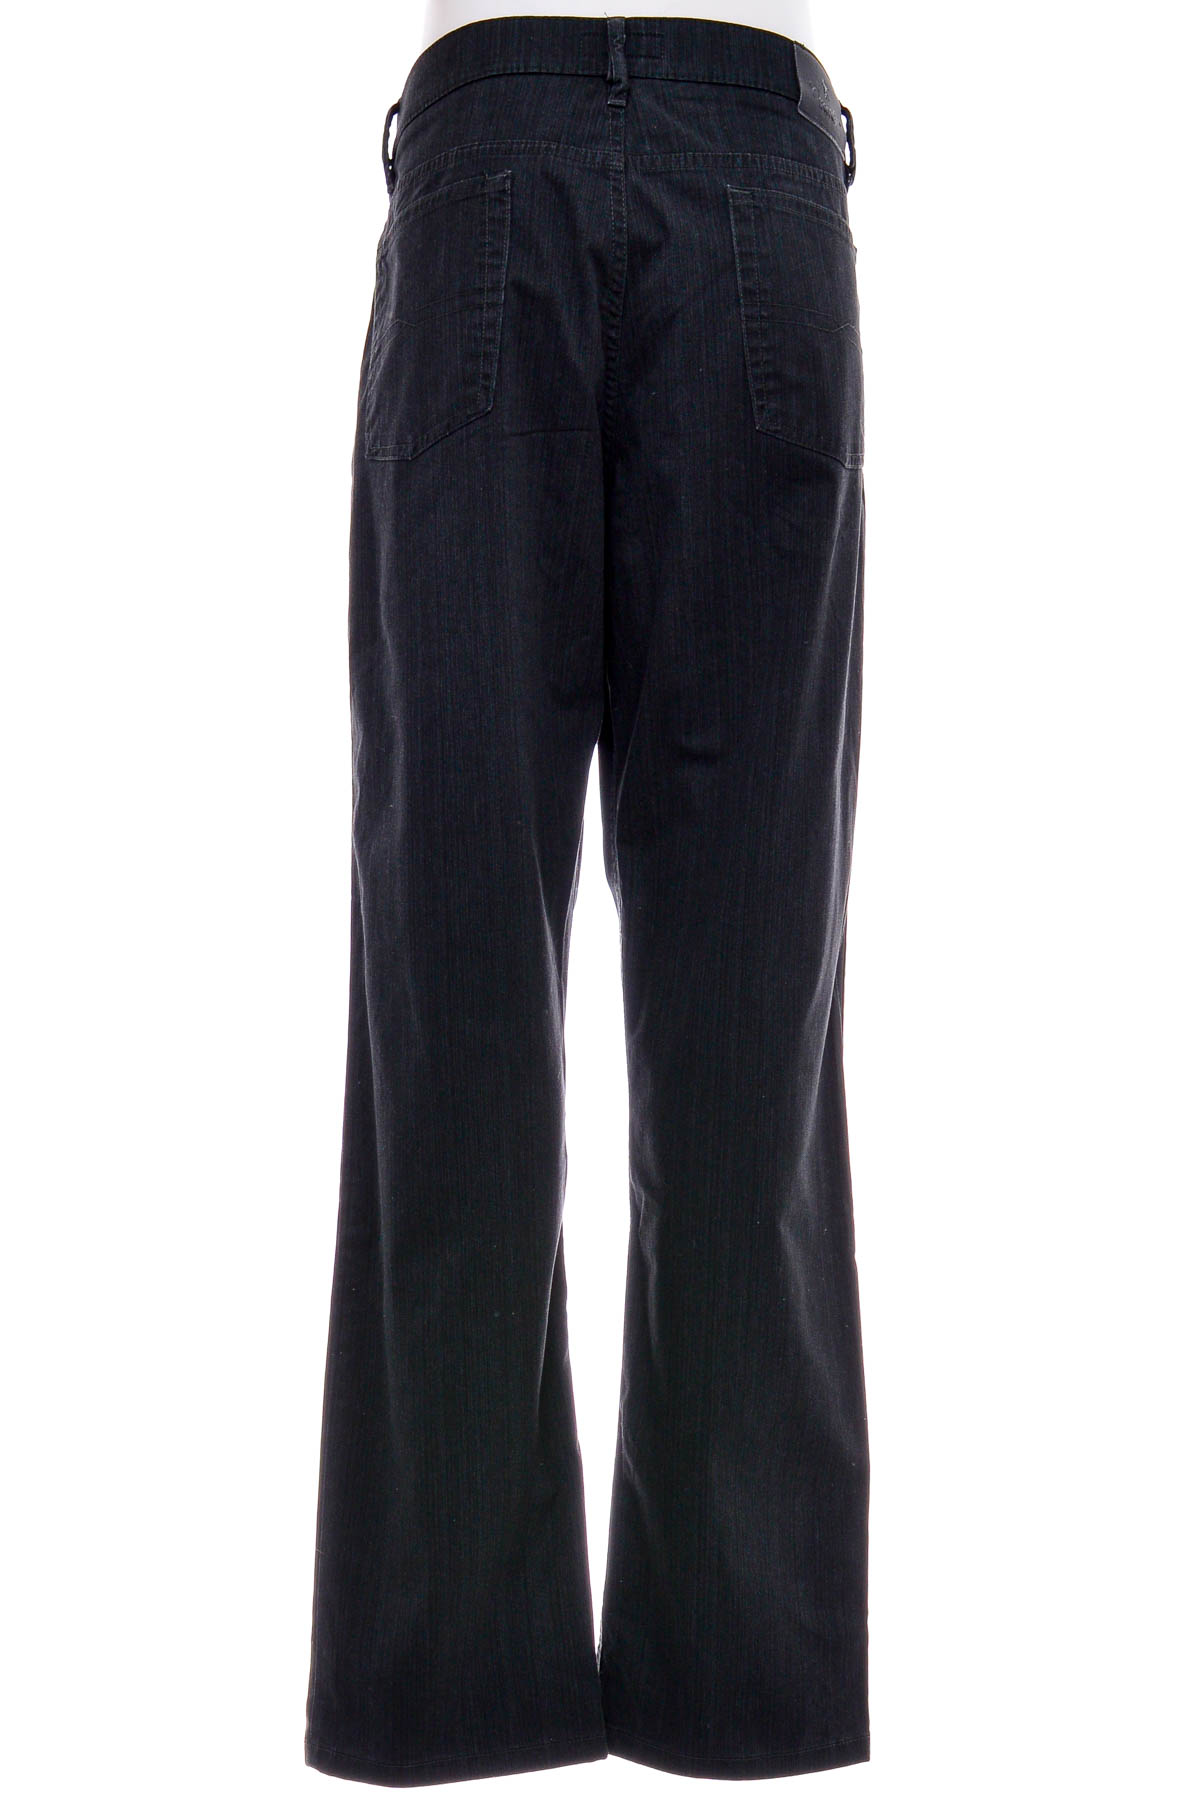 Men's trousers - Garnaby's - 1